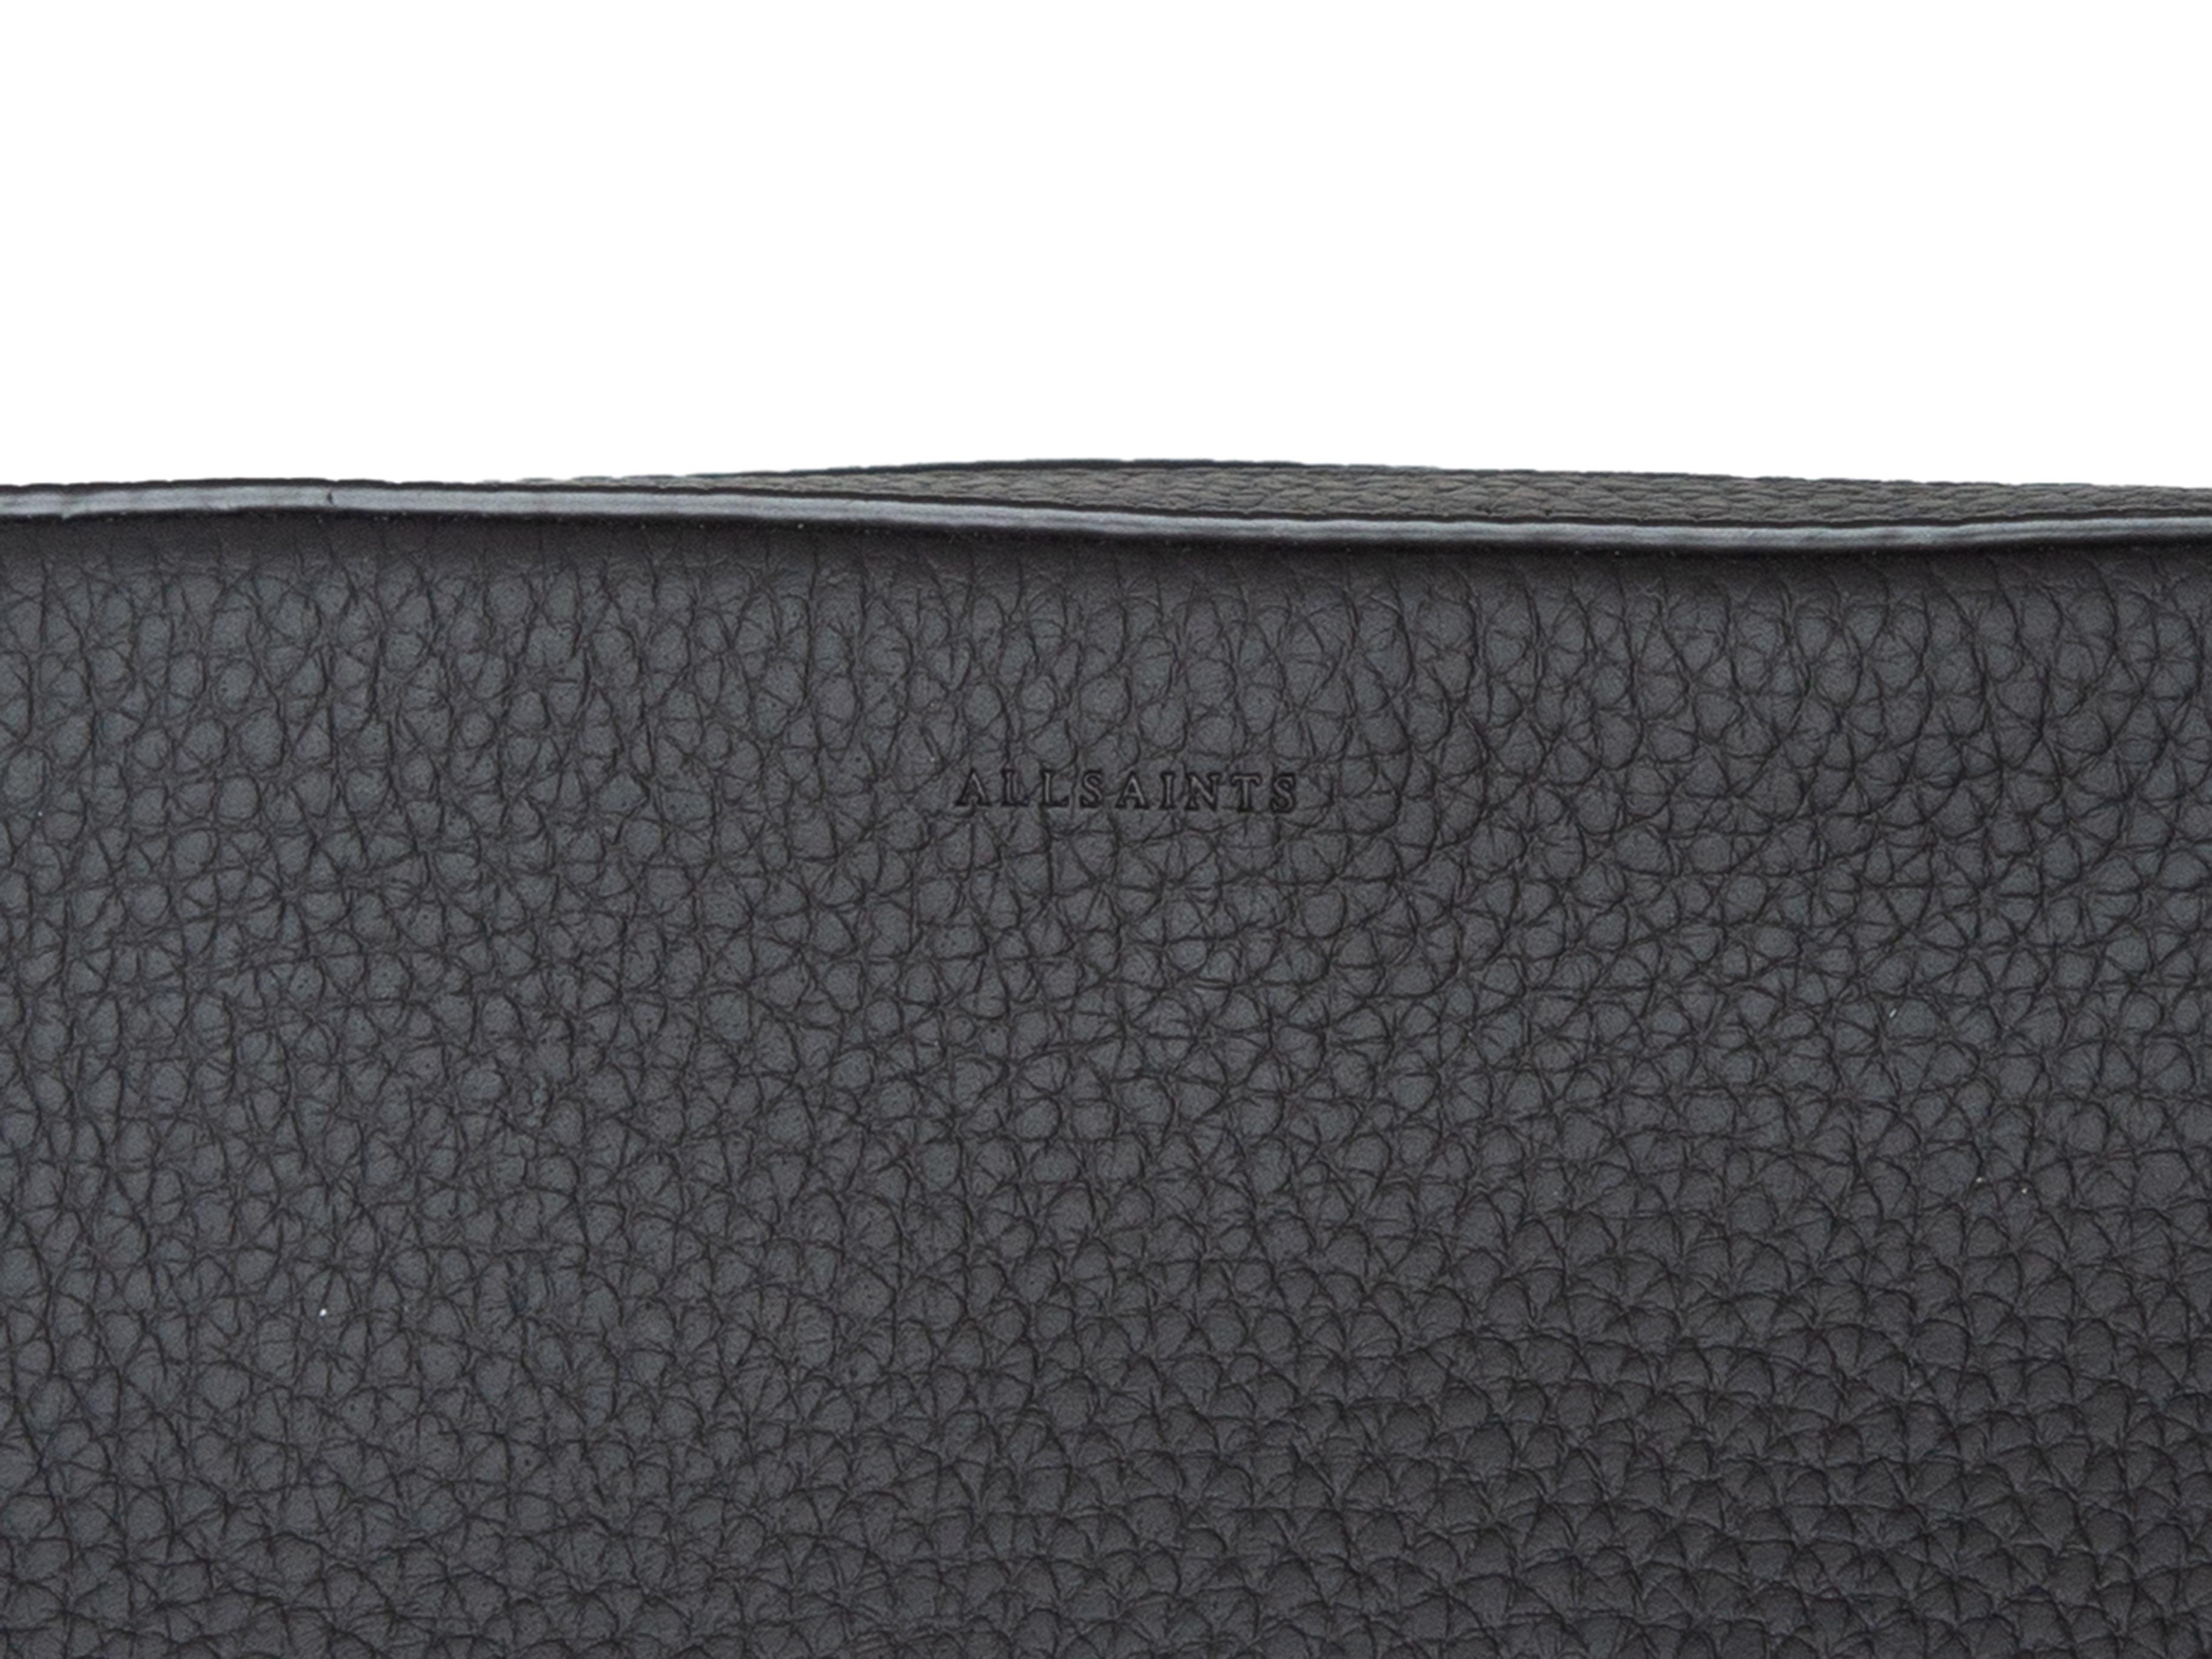 Product details: Black leather small crossbody bag by AllSaints. Silver-tone hardware. Zip closure pocket at back. Adjustable shoulder strap. Zip closure at top. 9